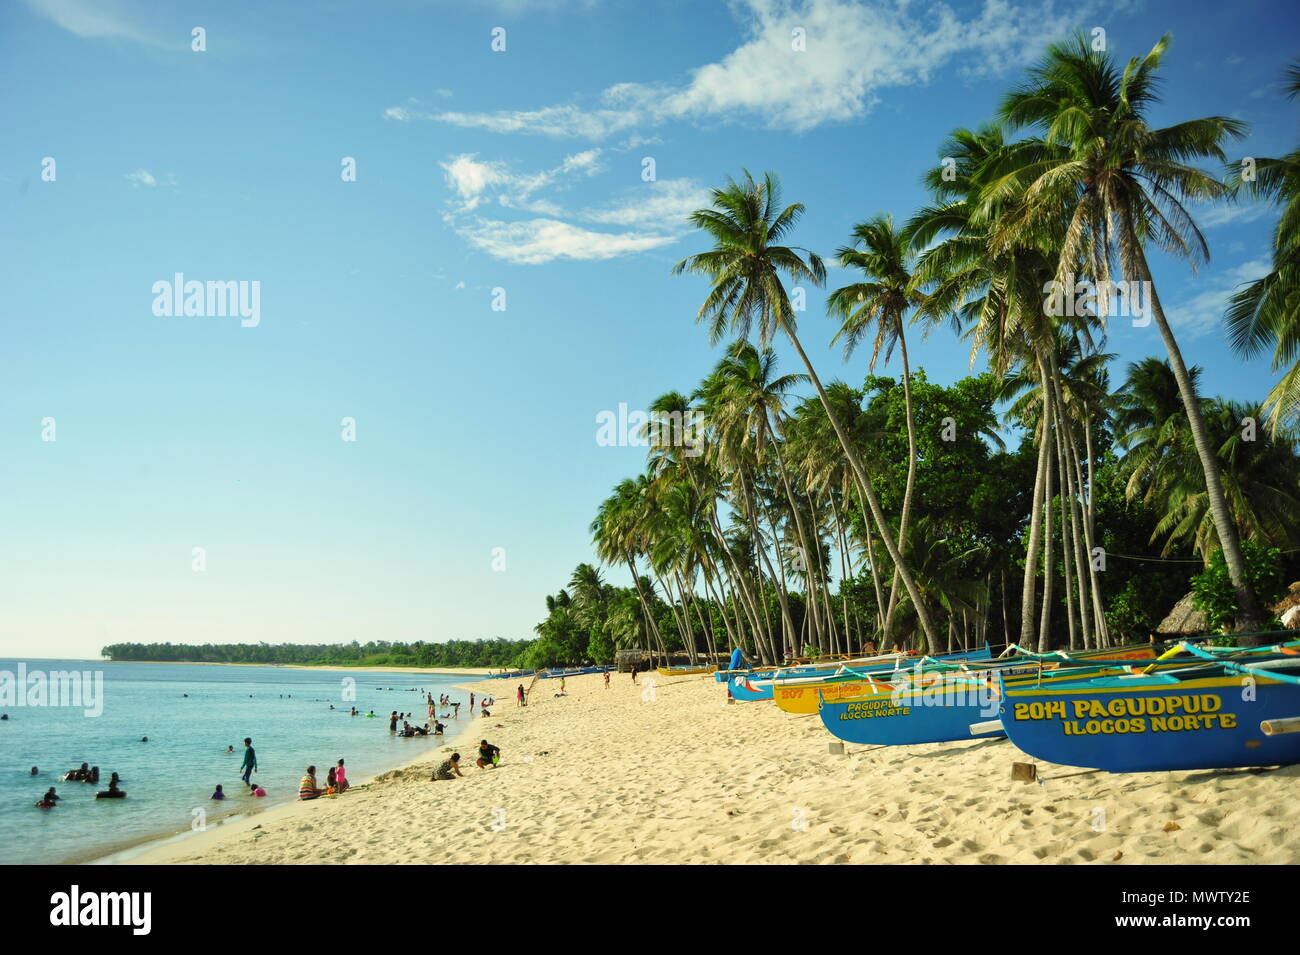 Saud Beach, Pagudpud, Luzon, Philippines Stock Photo